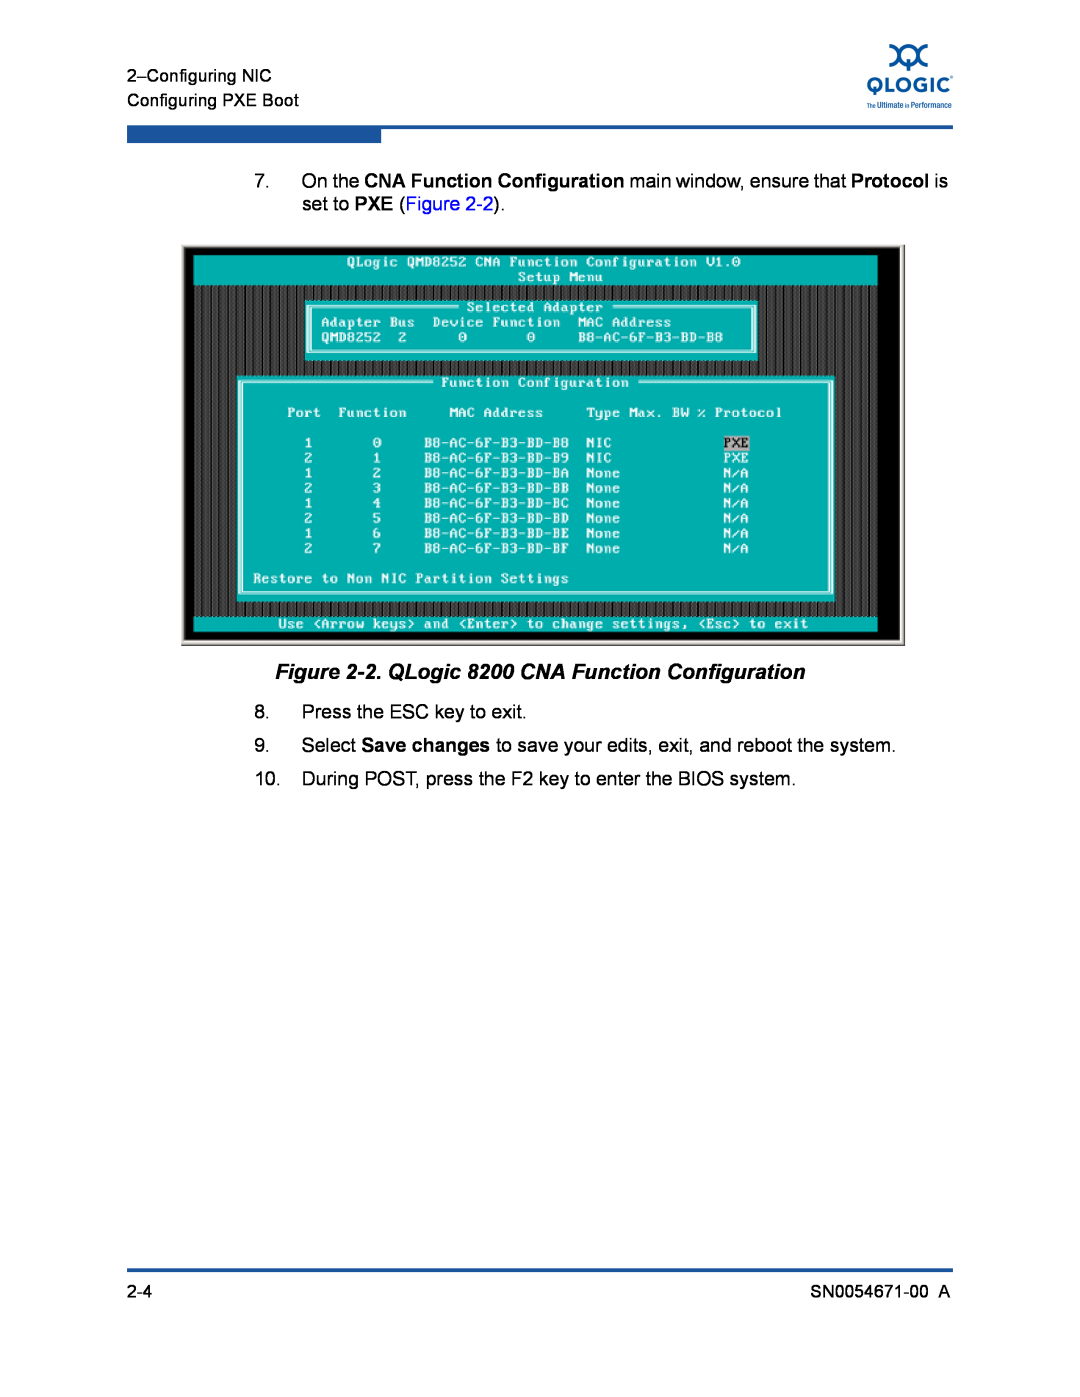 Q-Logic 3200 manual 2. QLogic 8200 CNA Function Configuration, Press the ESC key to exit 